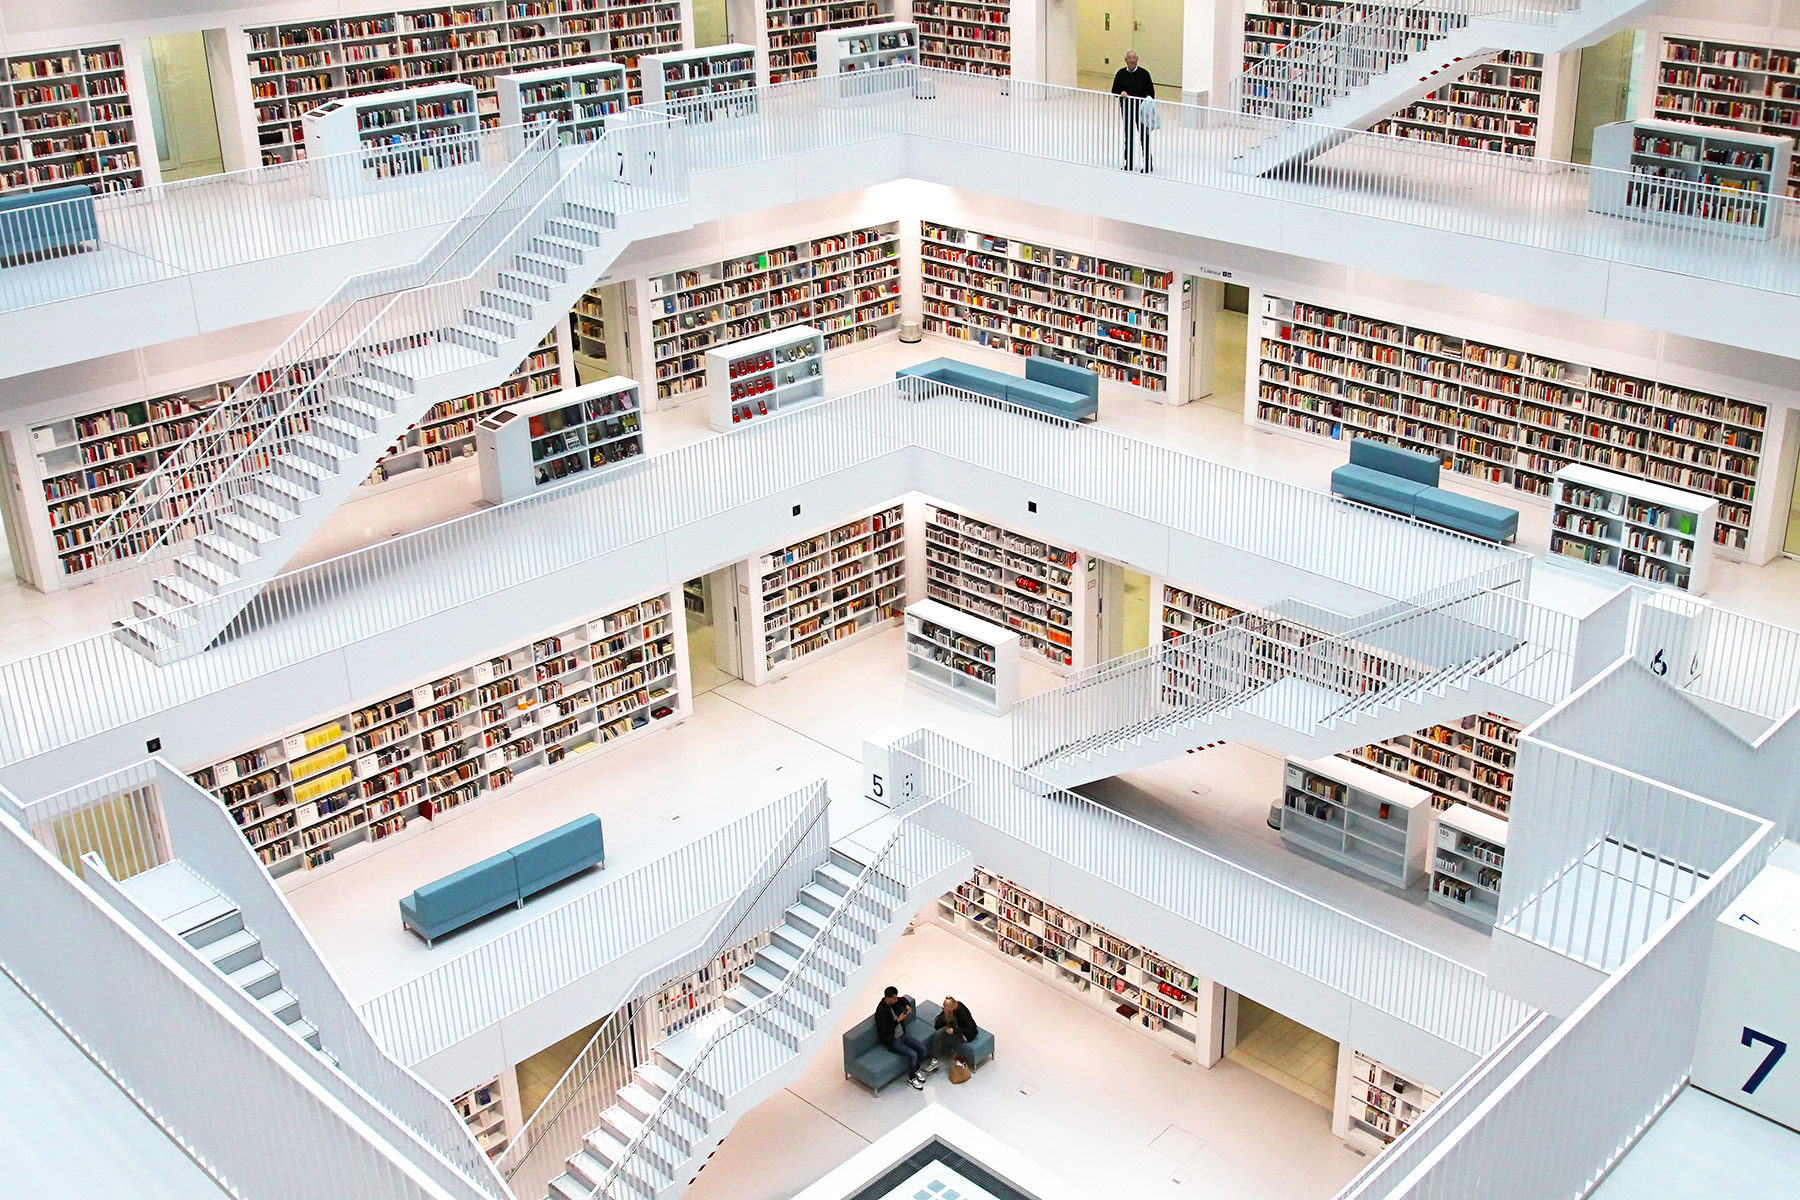 Stuttgart public library